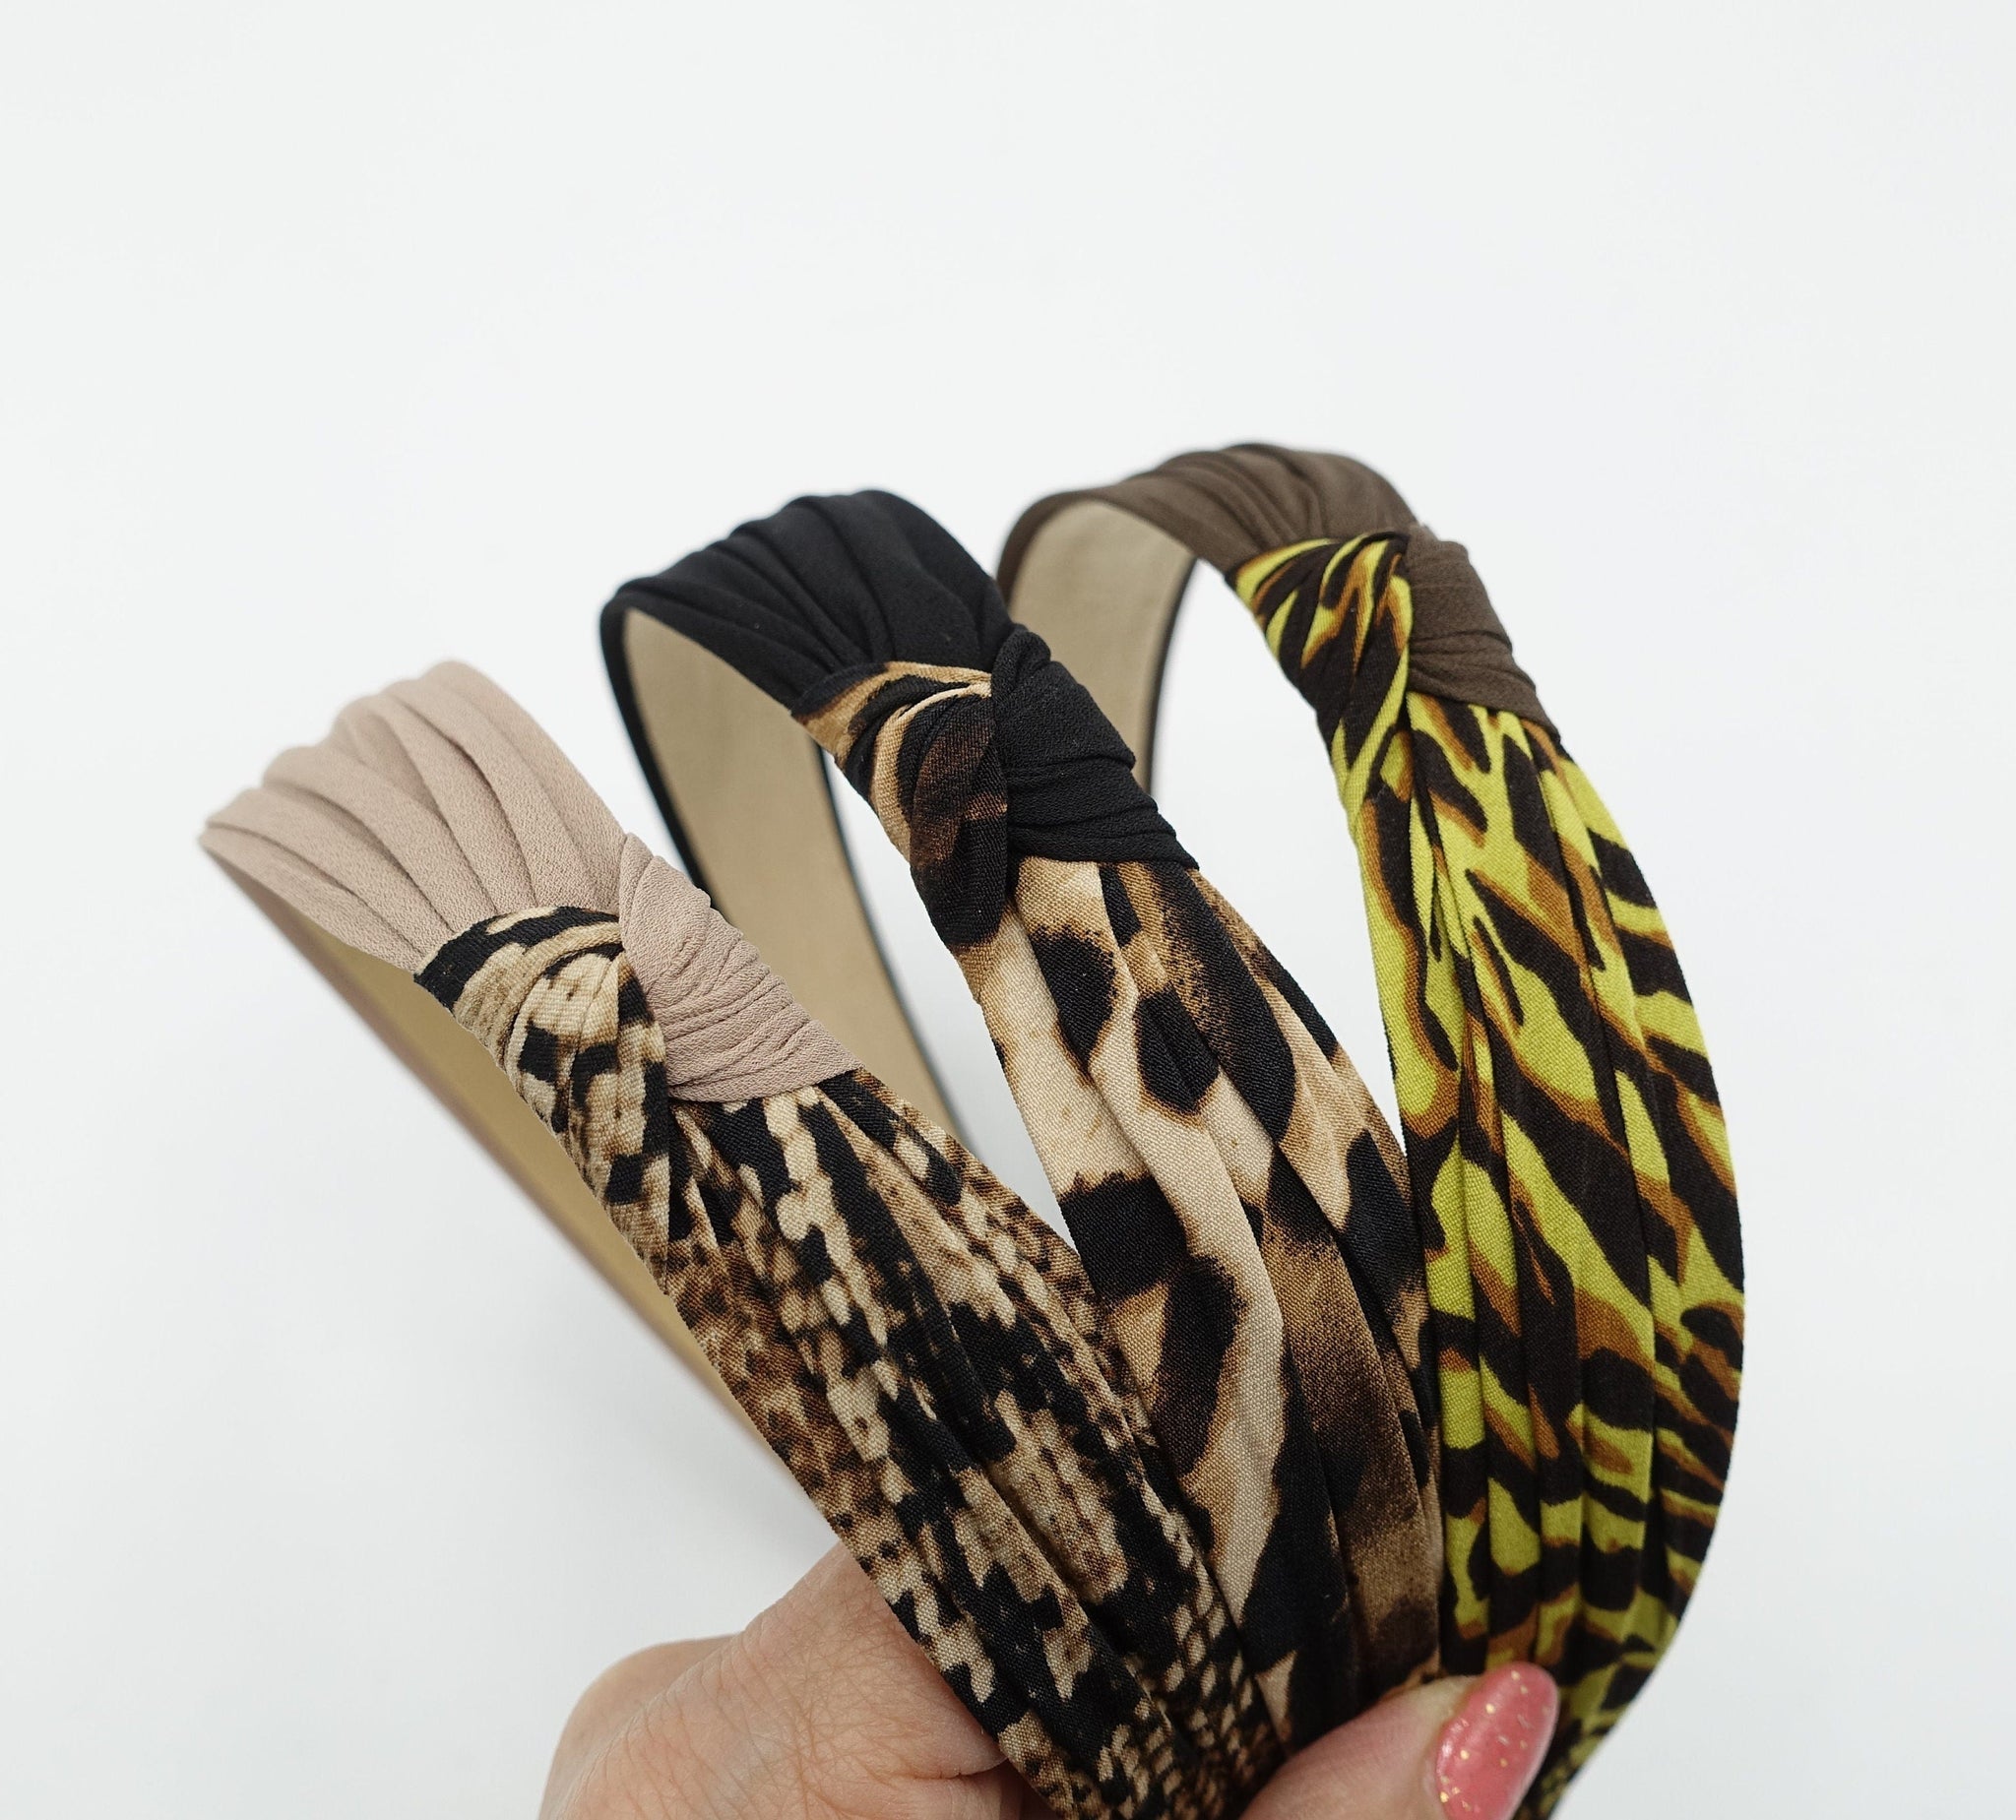 veryshine.com Headband animal print headband two tone knotted hairband leopard python hair accessory for women